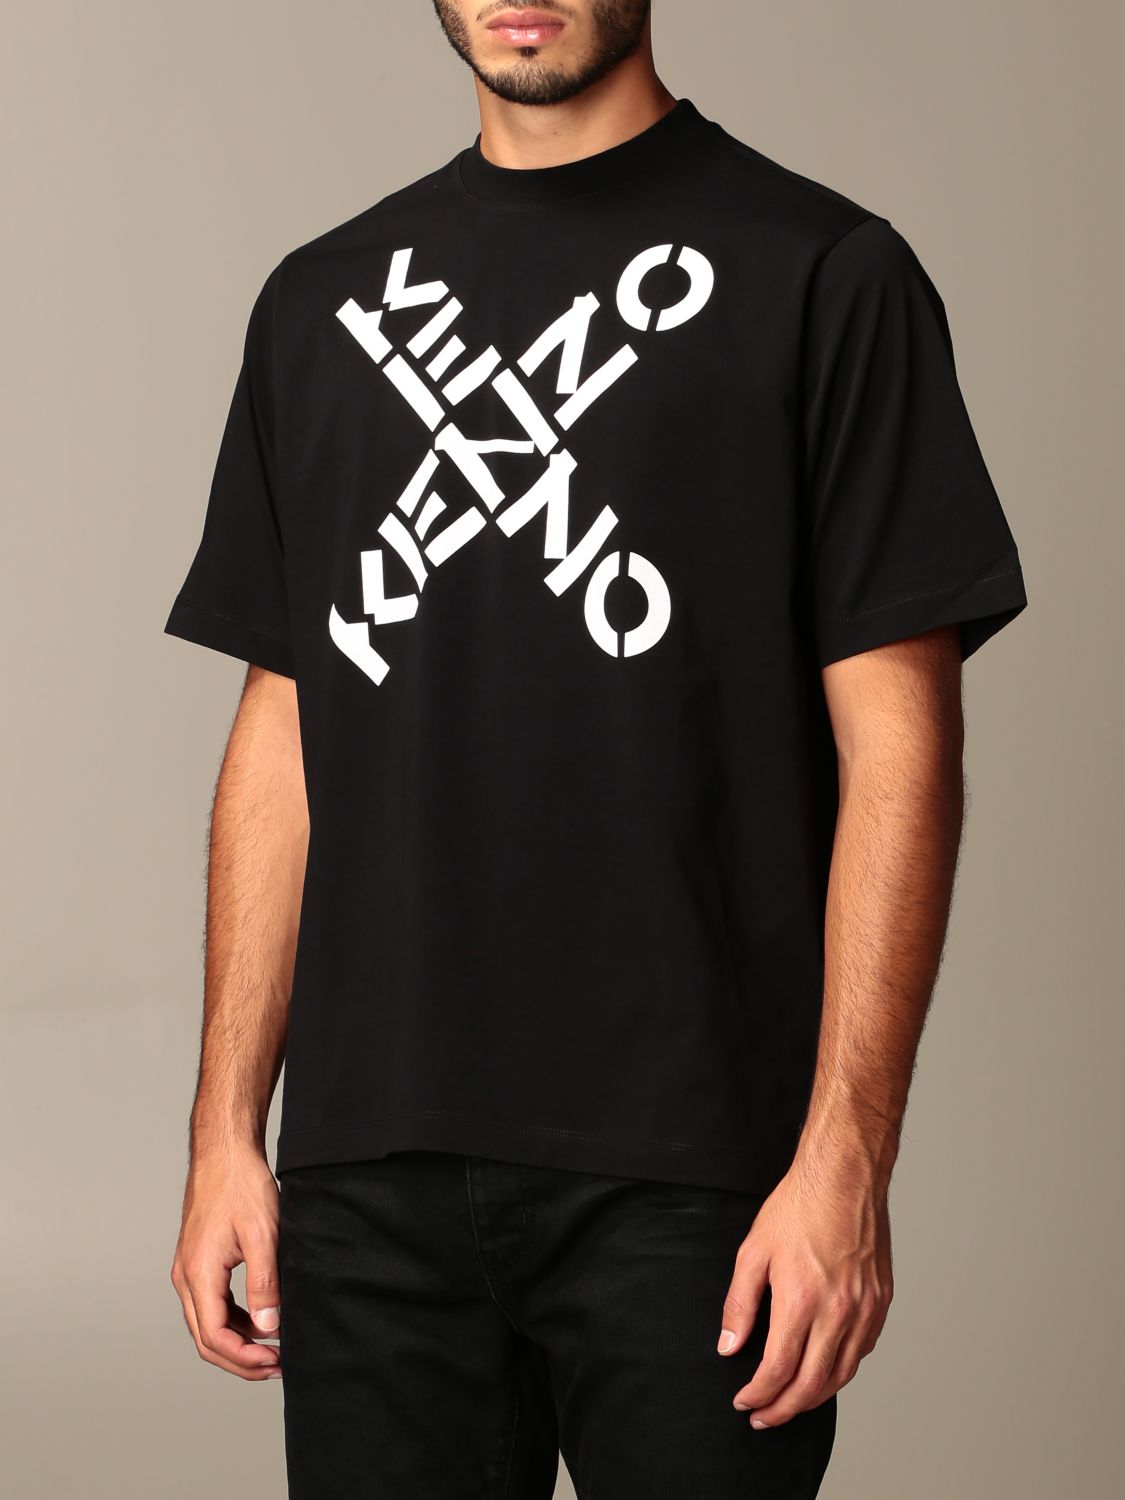 kenzo logo shirt